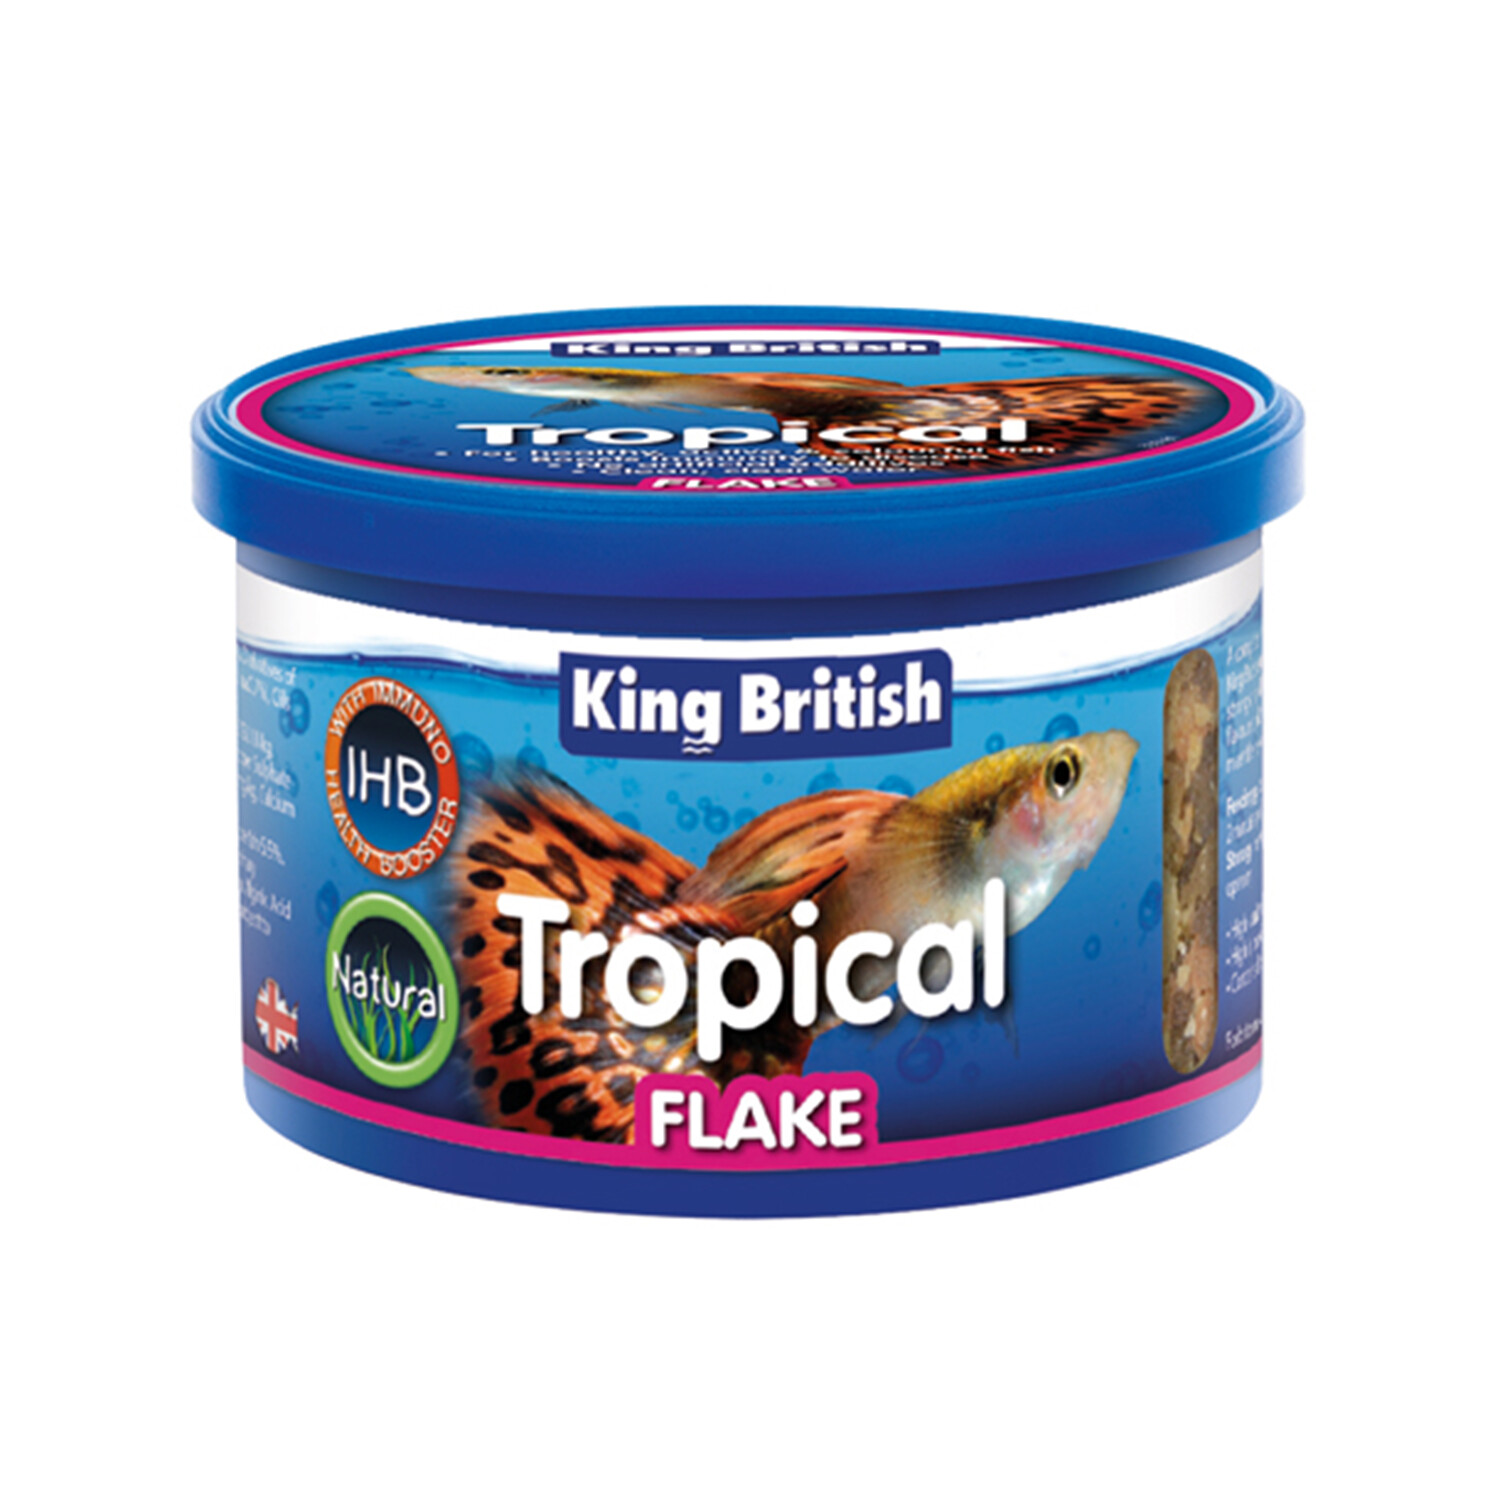 King British Tropical Flake Food 200g Image